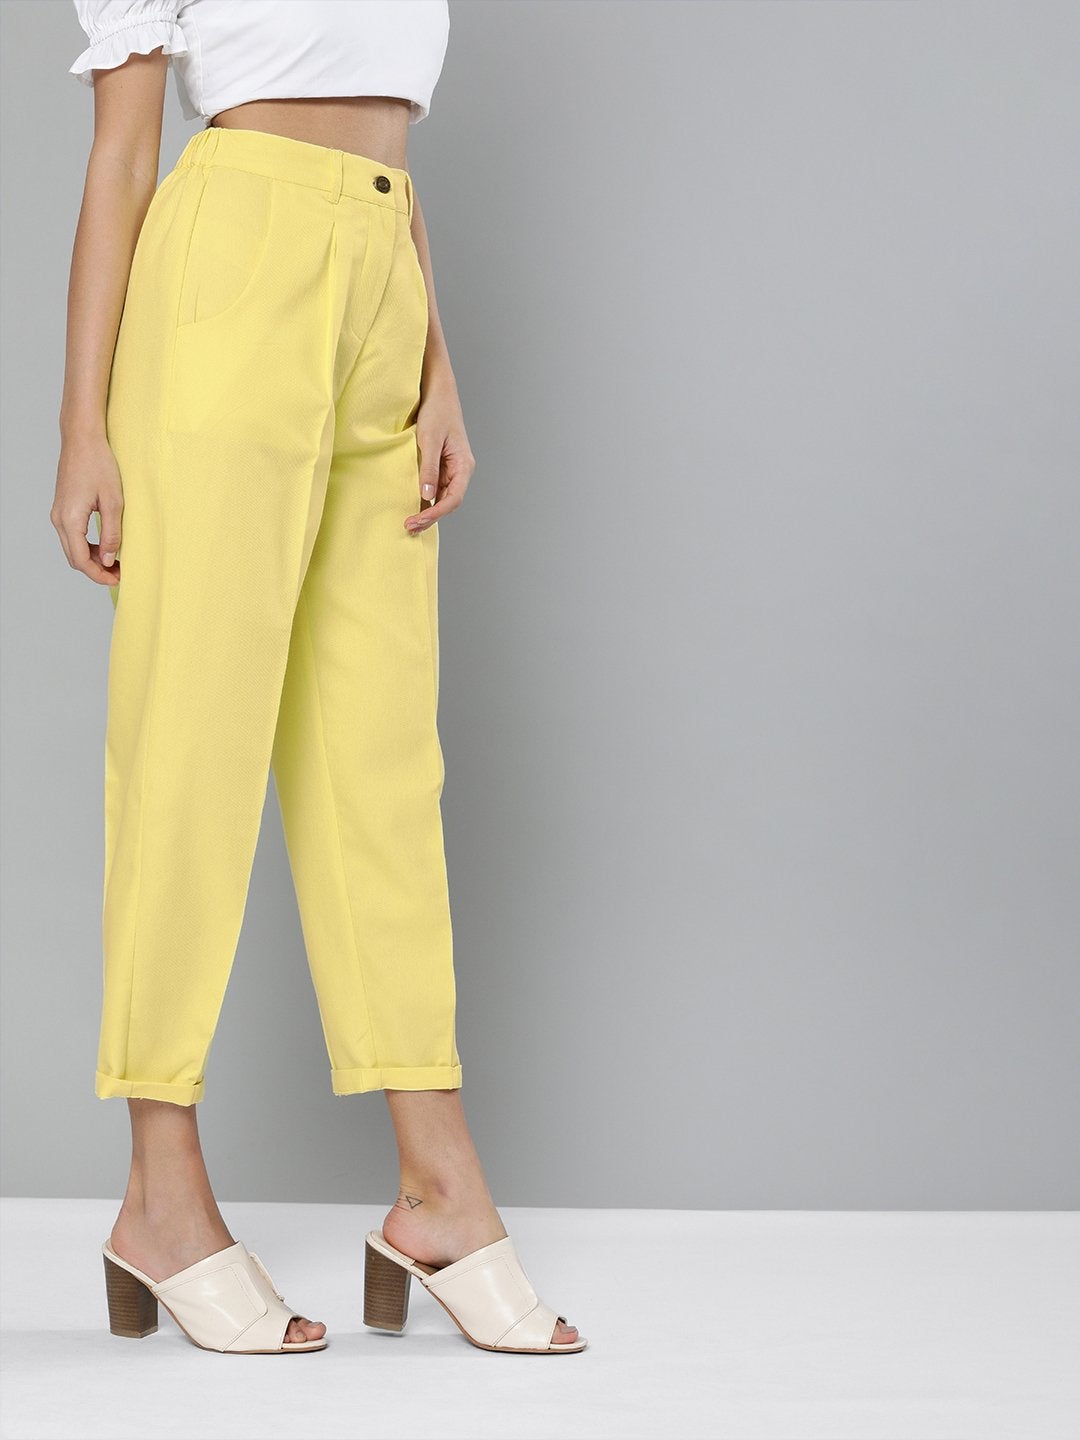 Women's Yellow Tapered Pants - SASSAFRAS